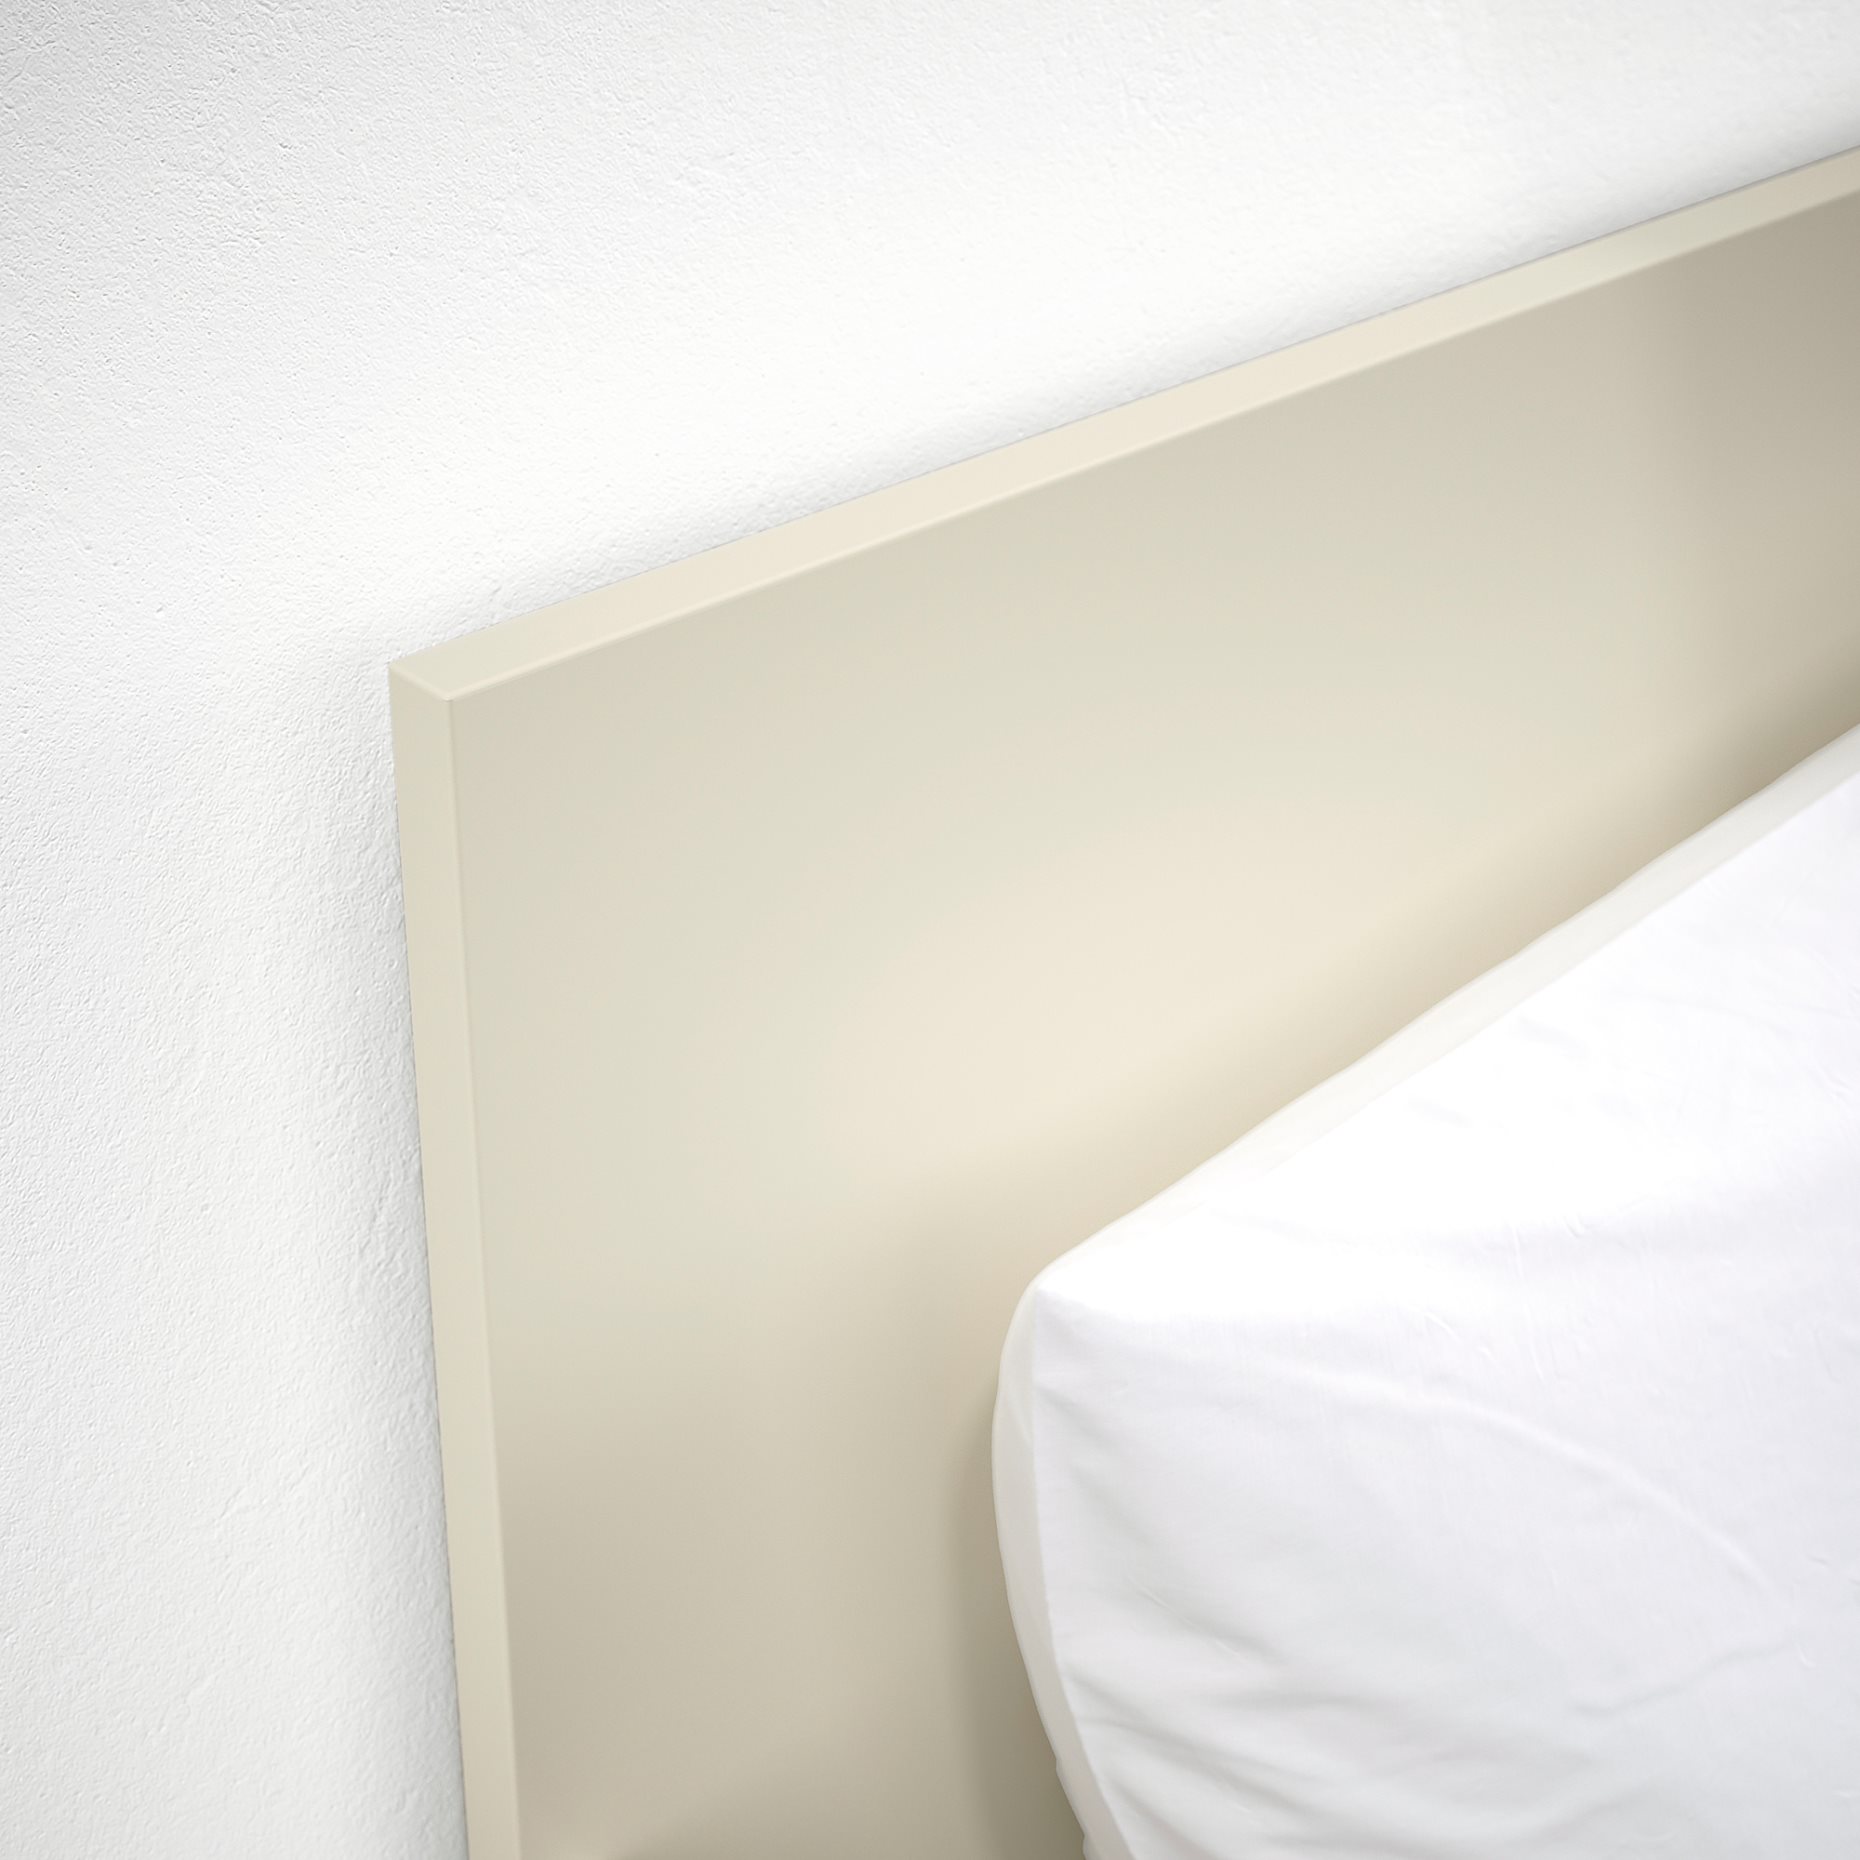 GURSKEN, bed frame with headboard, 140X200 cm, 194.086.69